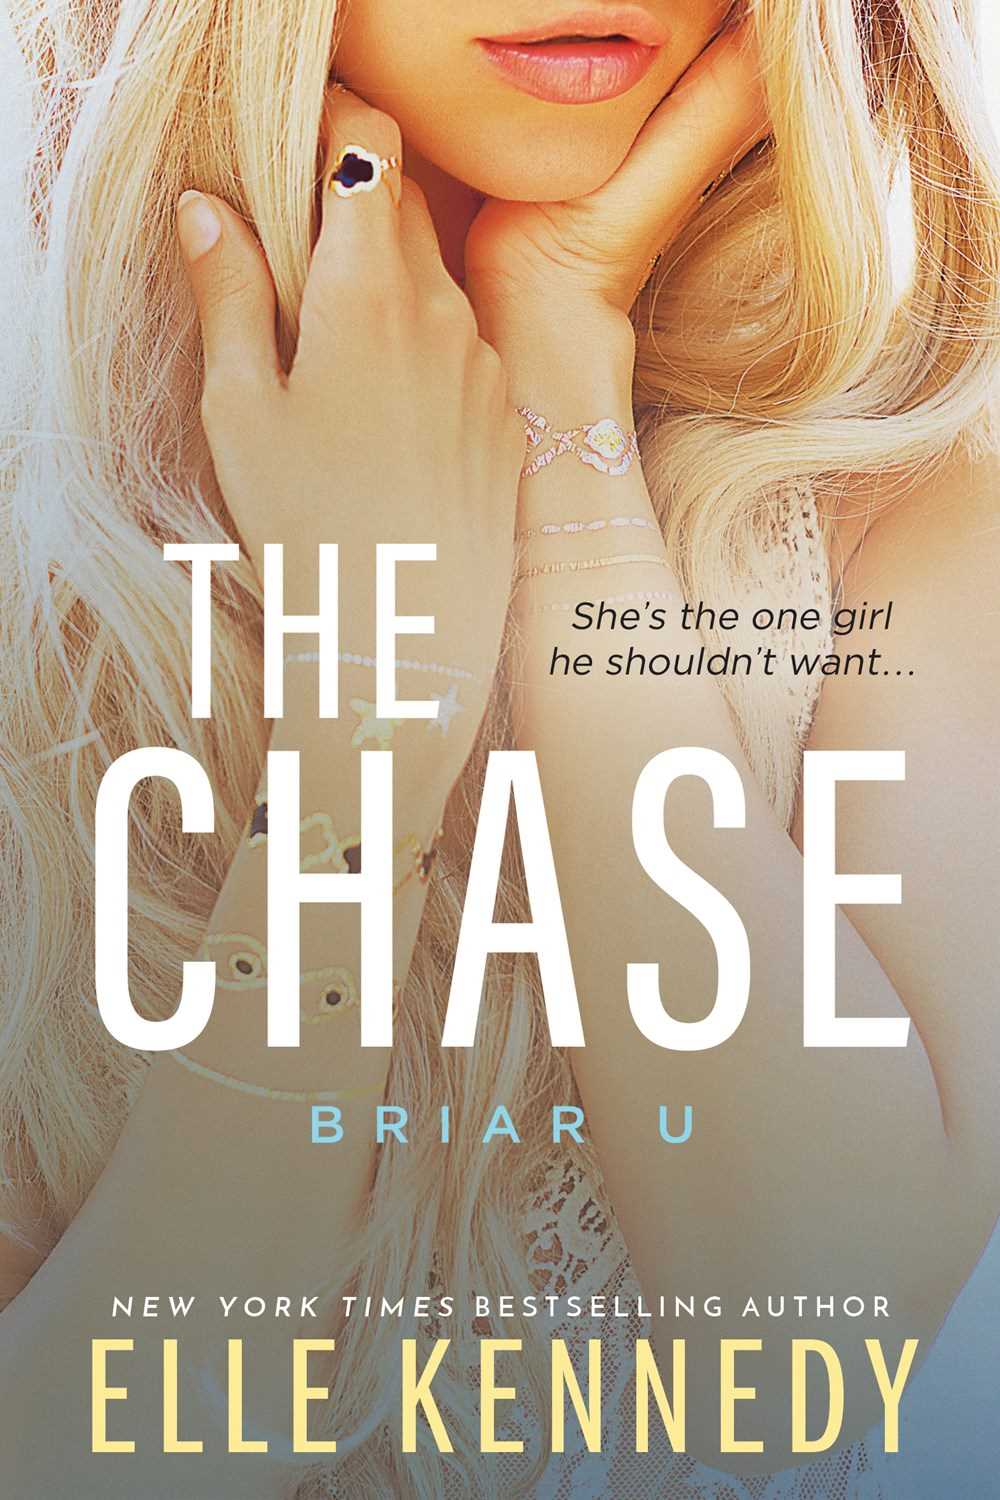 Briar U #01: Chase